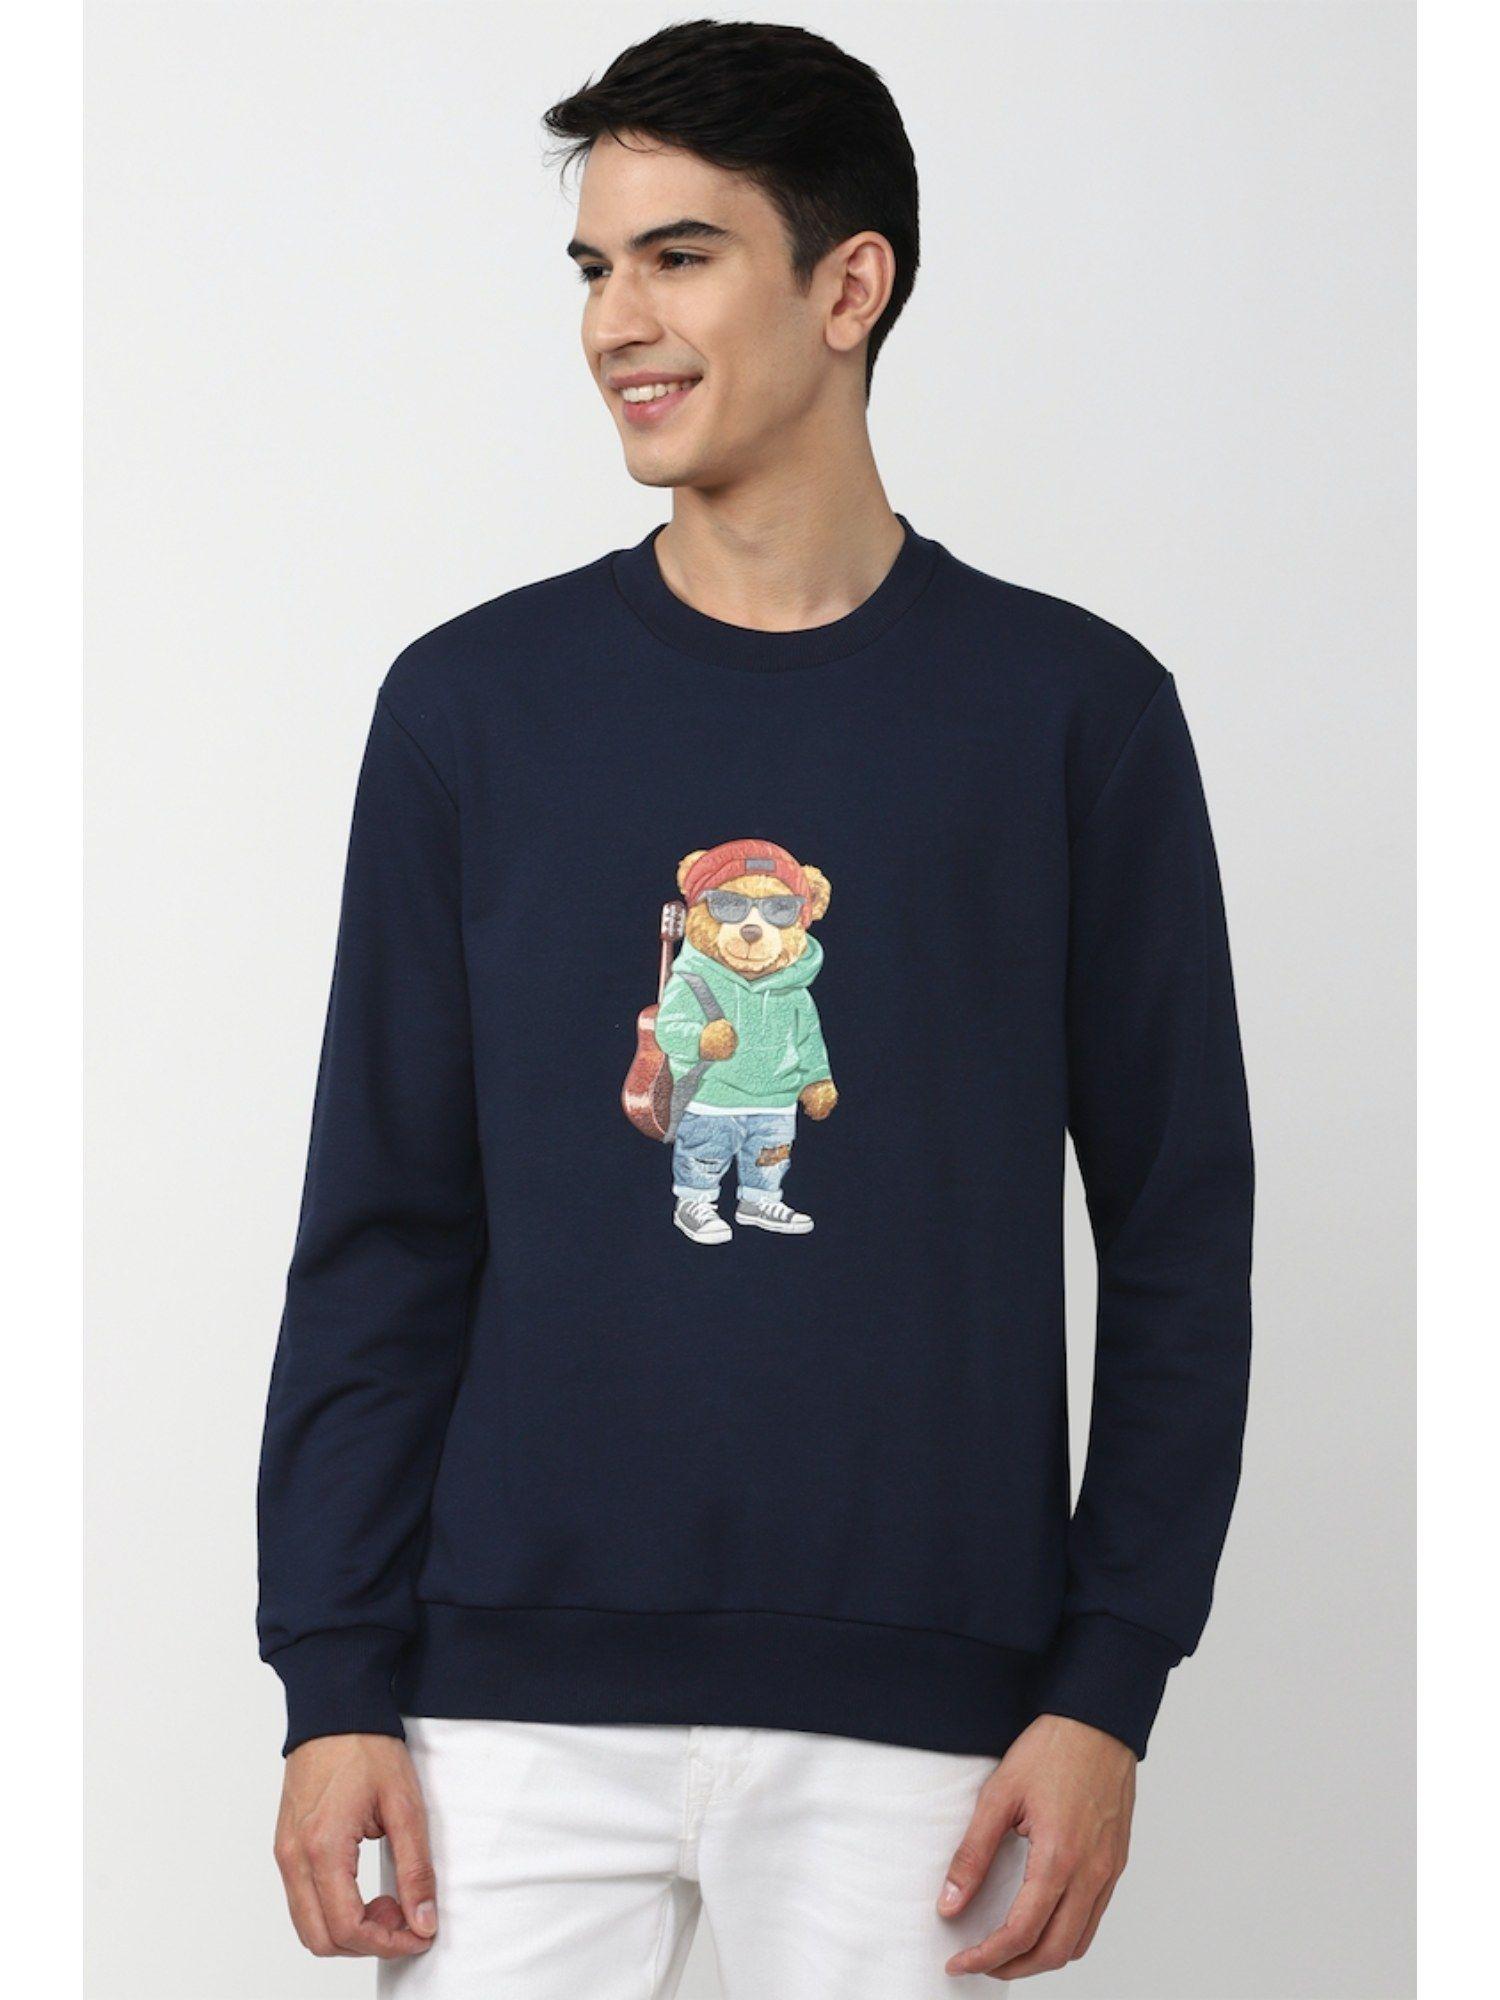 graphic-sweatshirt-in-navy-blue